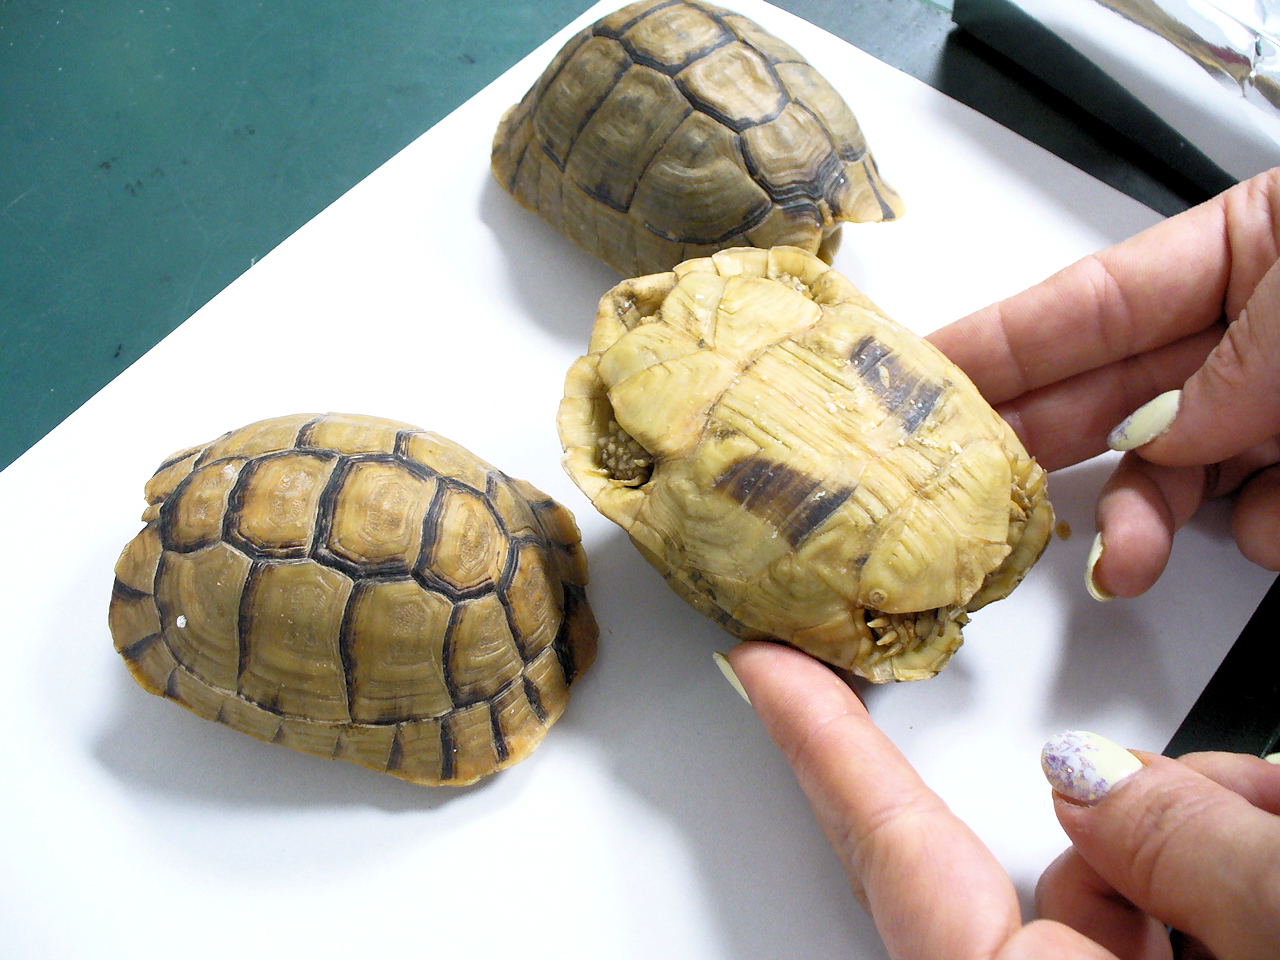 Three Moroccan tortoises